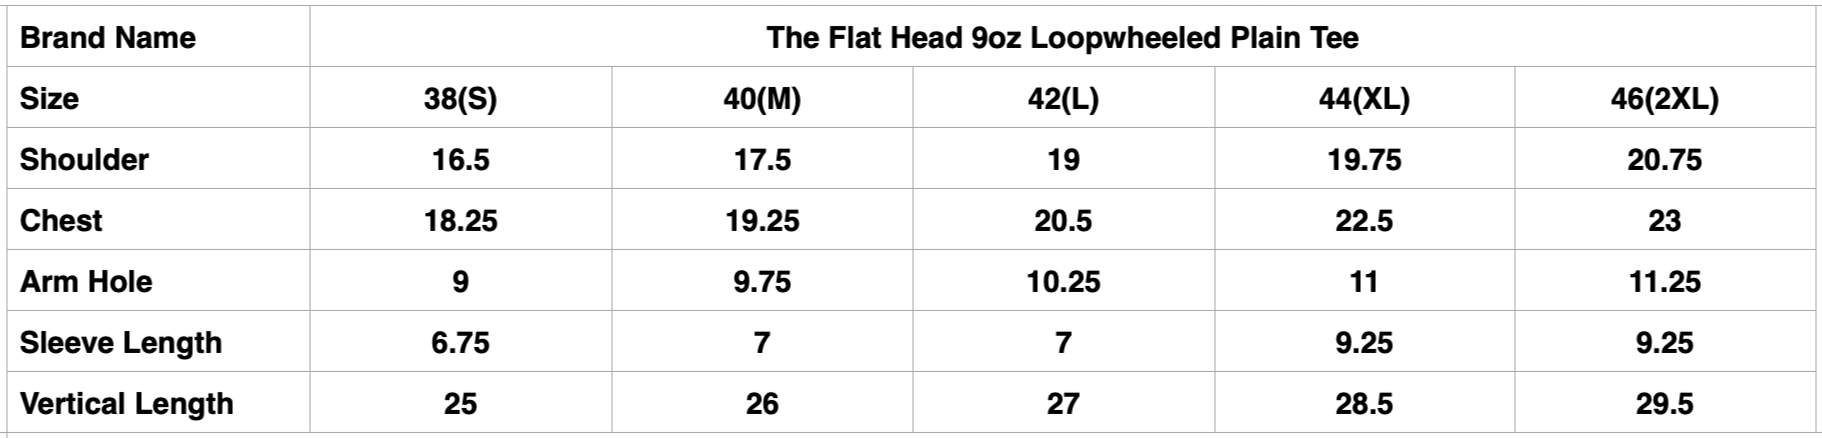 The Flat Head 9oz Loopwheeled Plain Tee (Charcoal)